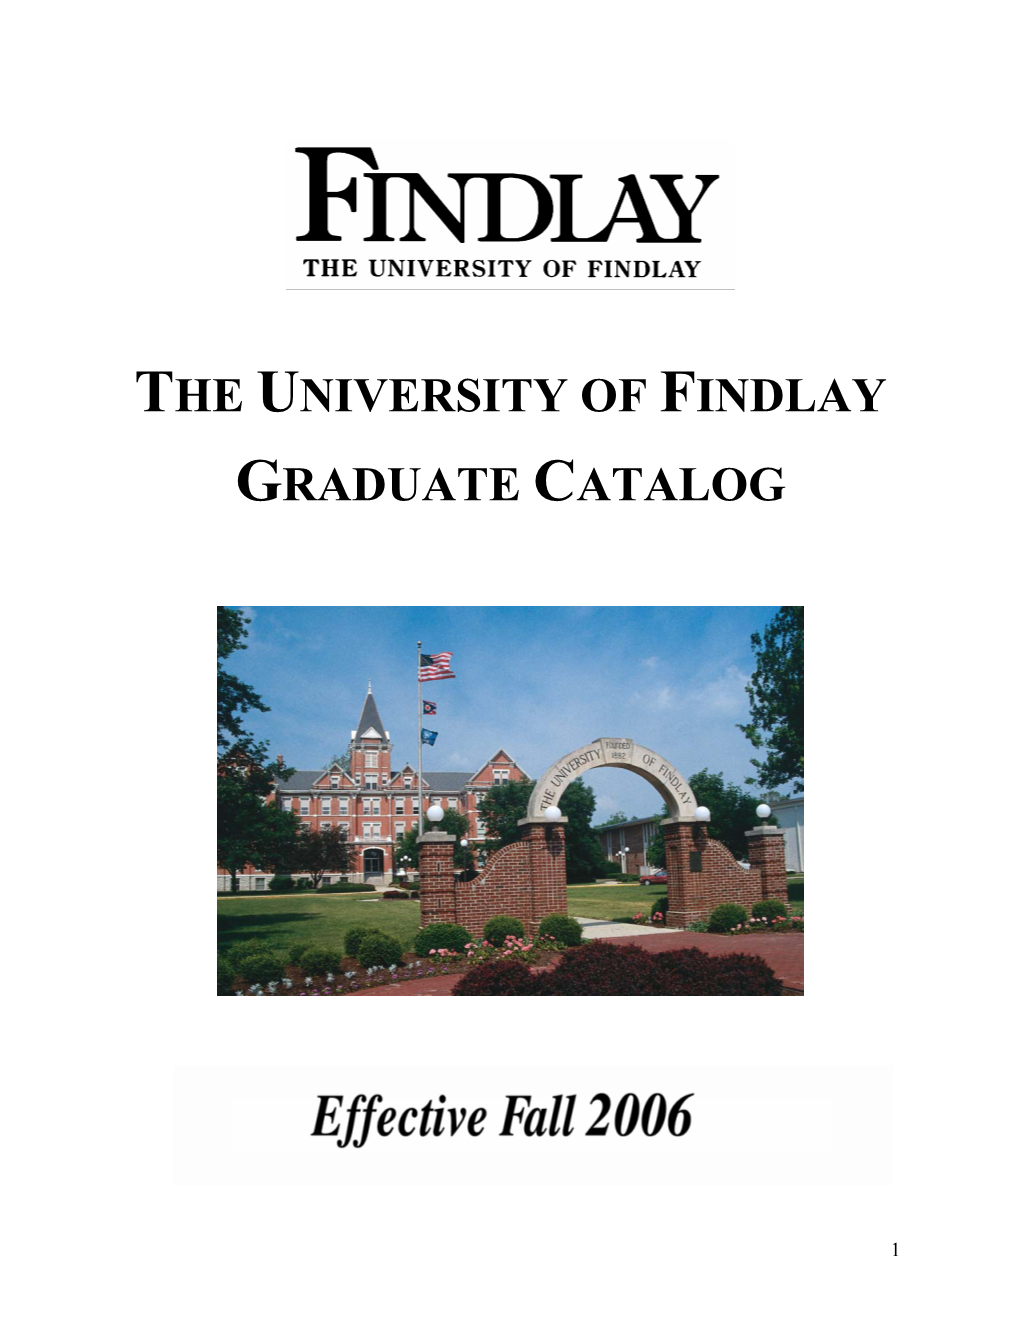 The University of Findlay Graduate Catalog